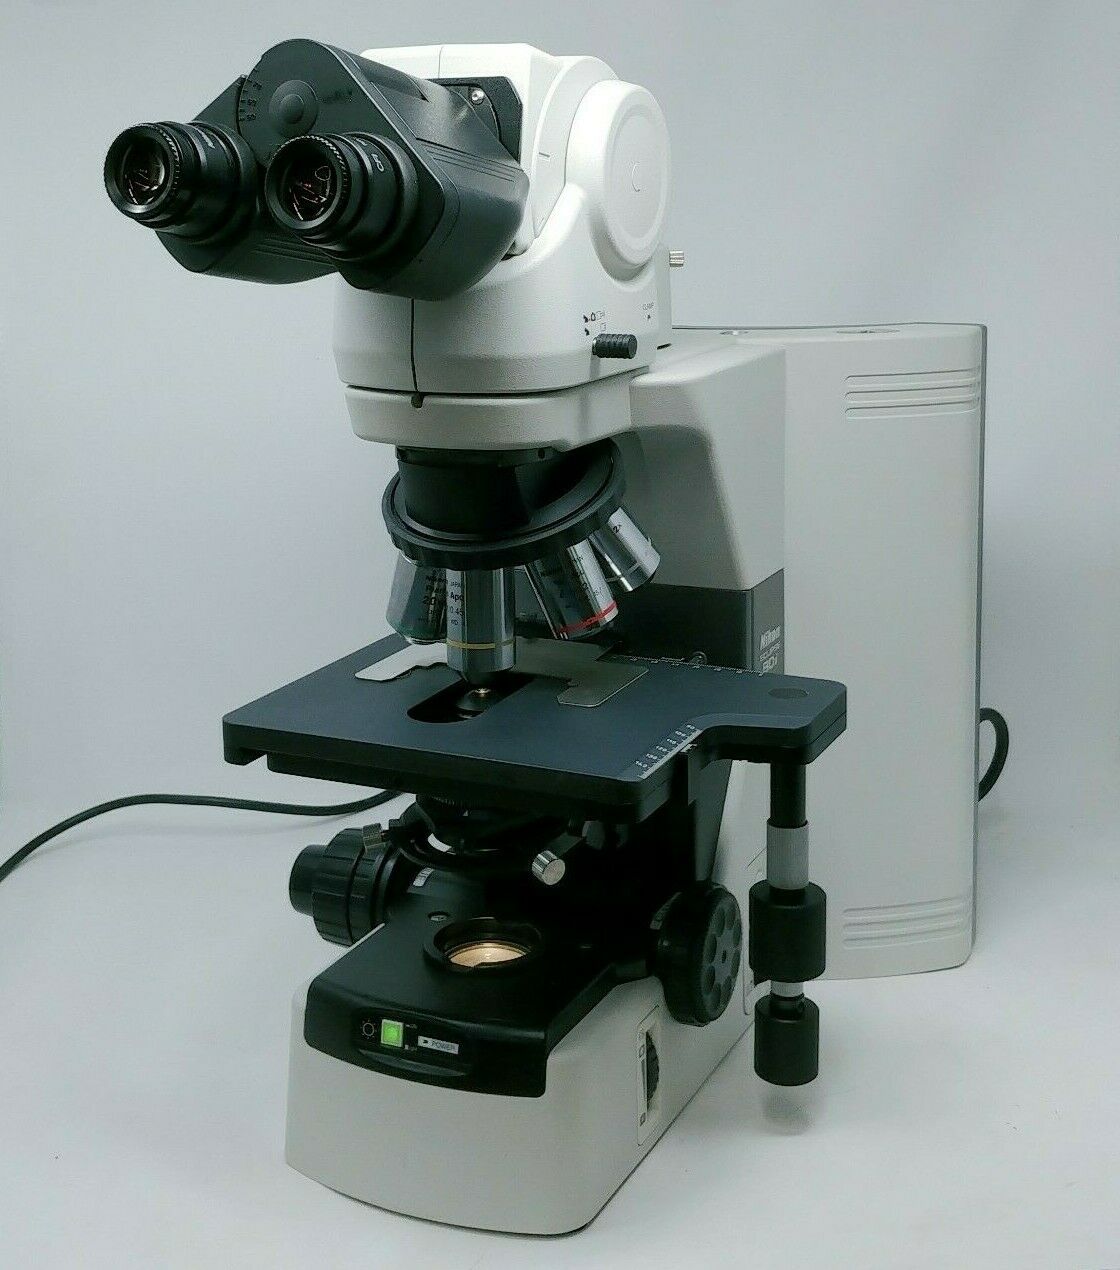 Nikon Microscope Eclipse 80i with 2x and Apo Objectives - microscopemarketplace